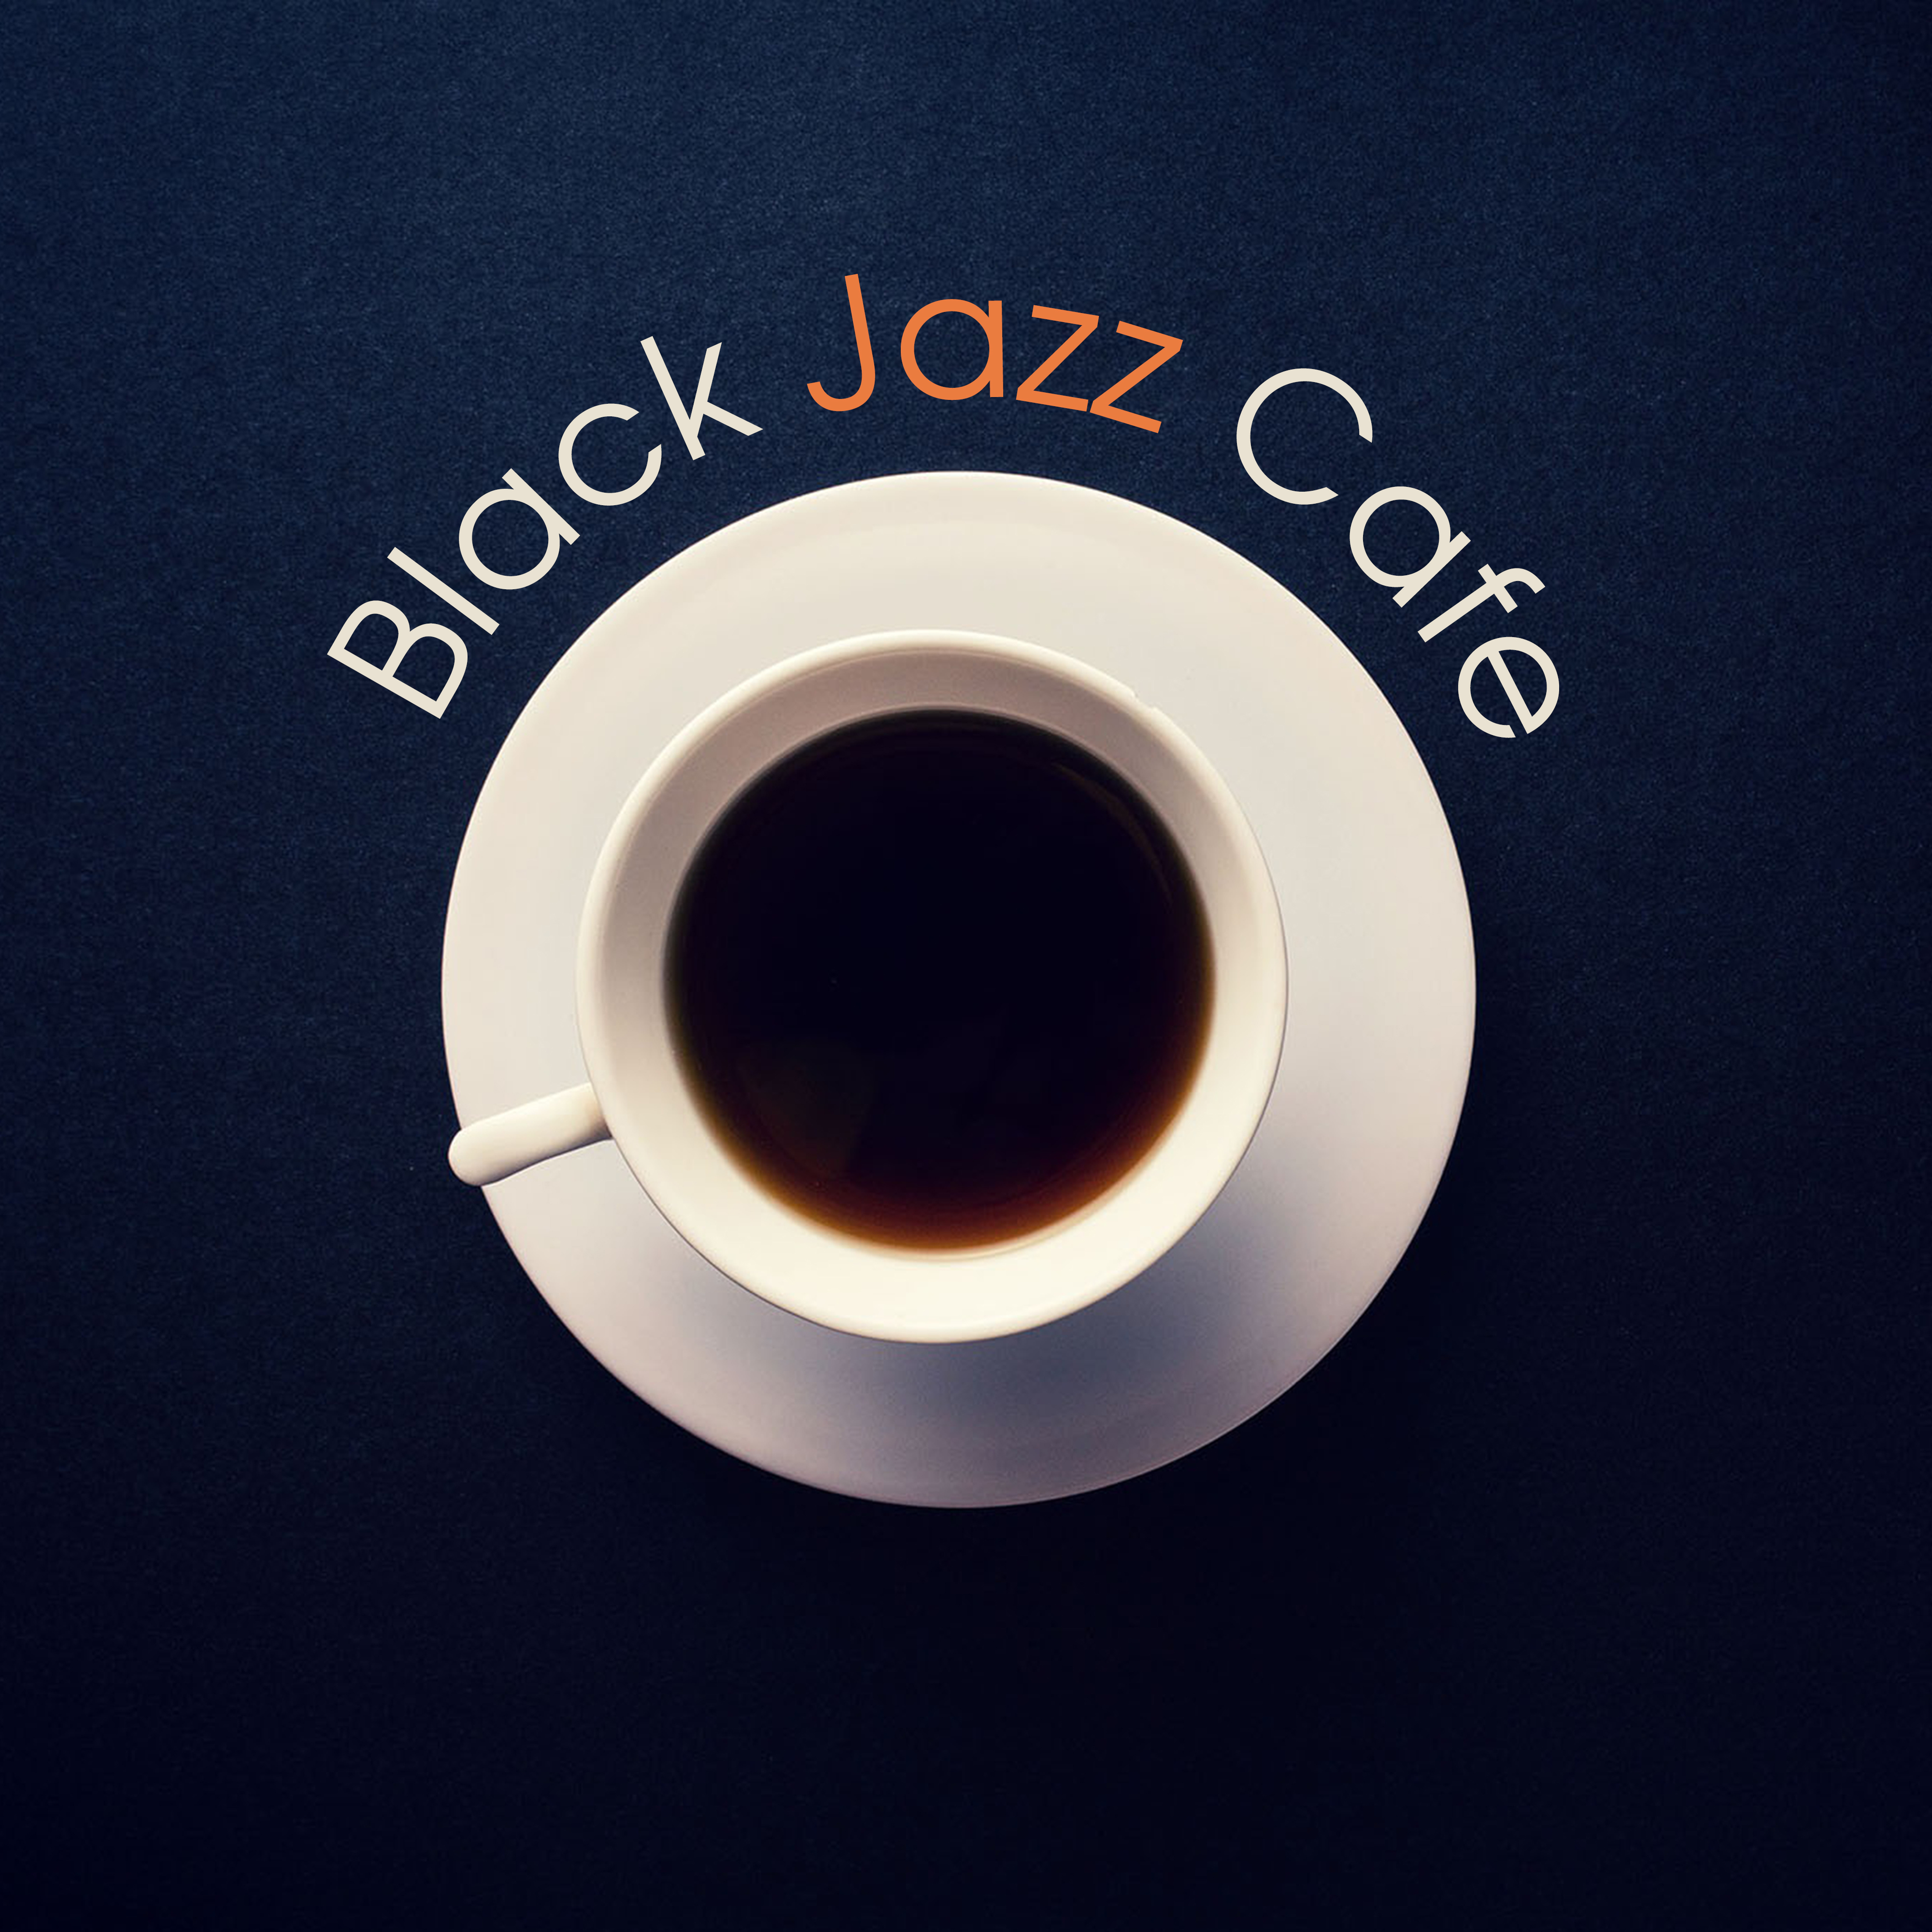 Black Jazz Cafe  Smooth Jazz, The Best for Cafe  Jazz Club, Relaxing Jazz Music